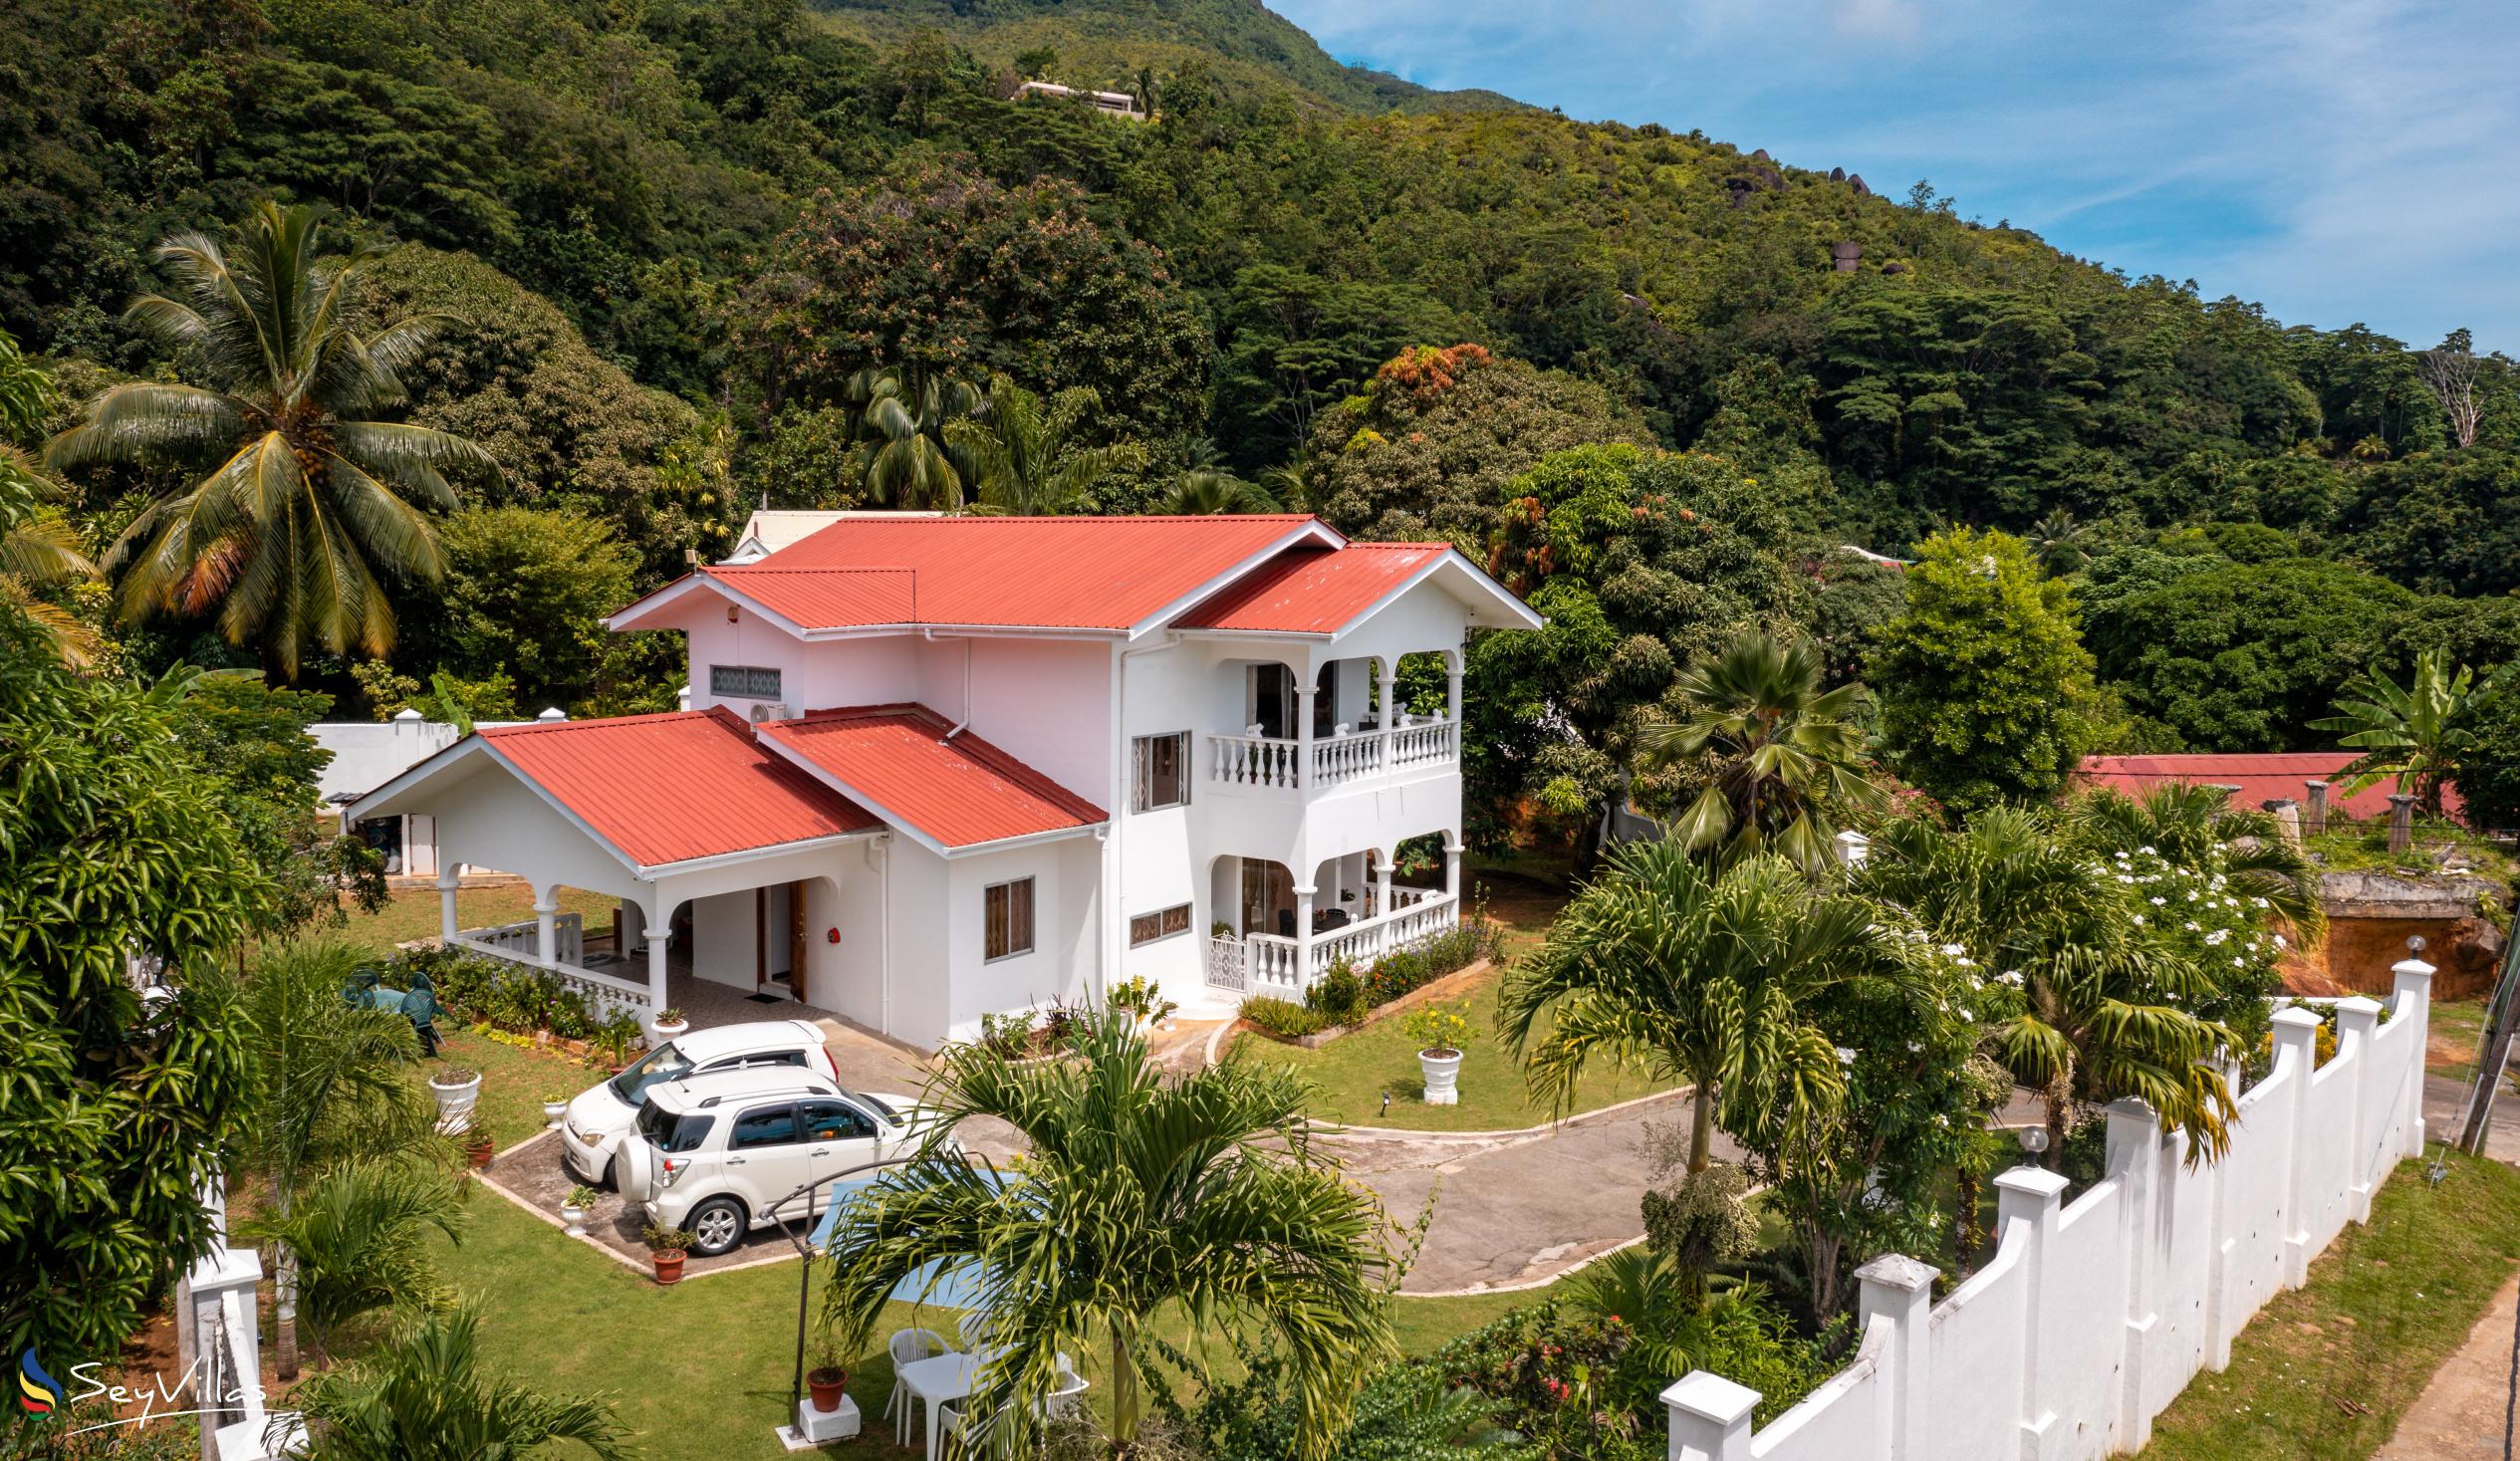 Photo 5: Villa Verde - Outdoor area - Mahé (Seychelles)